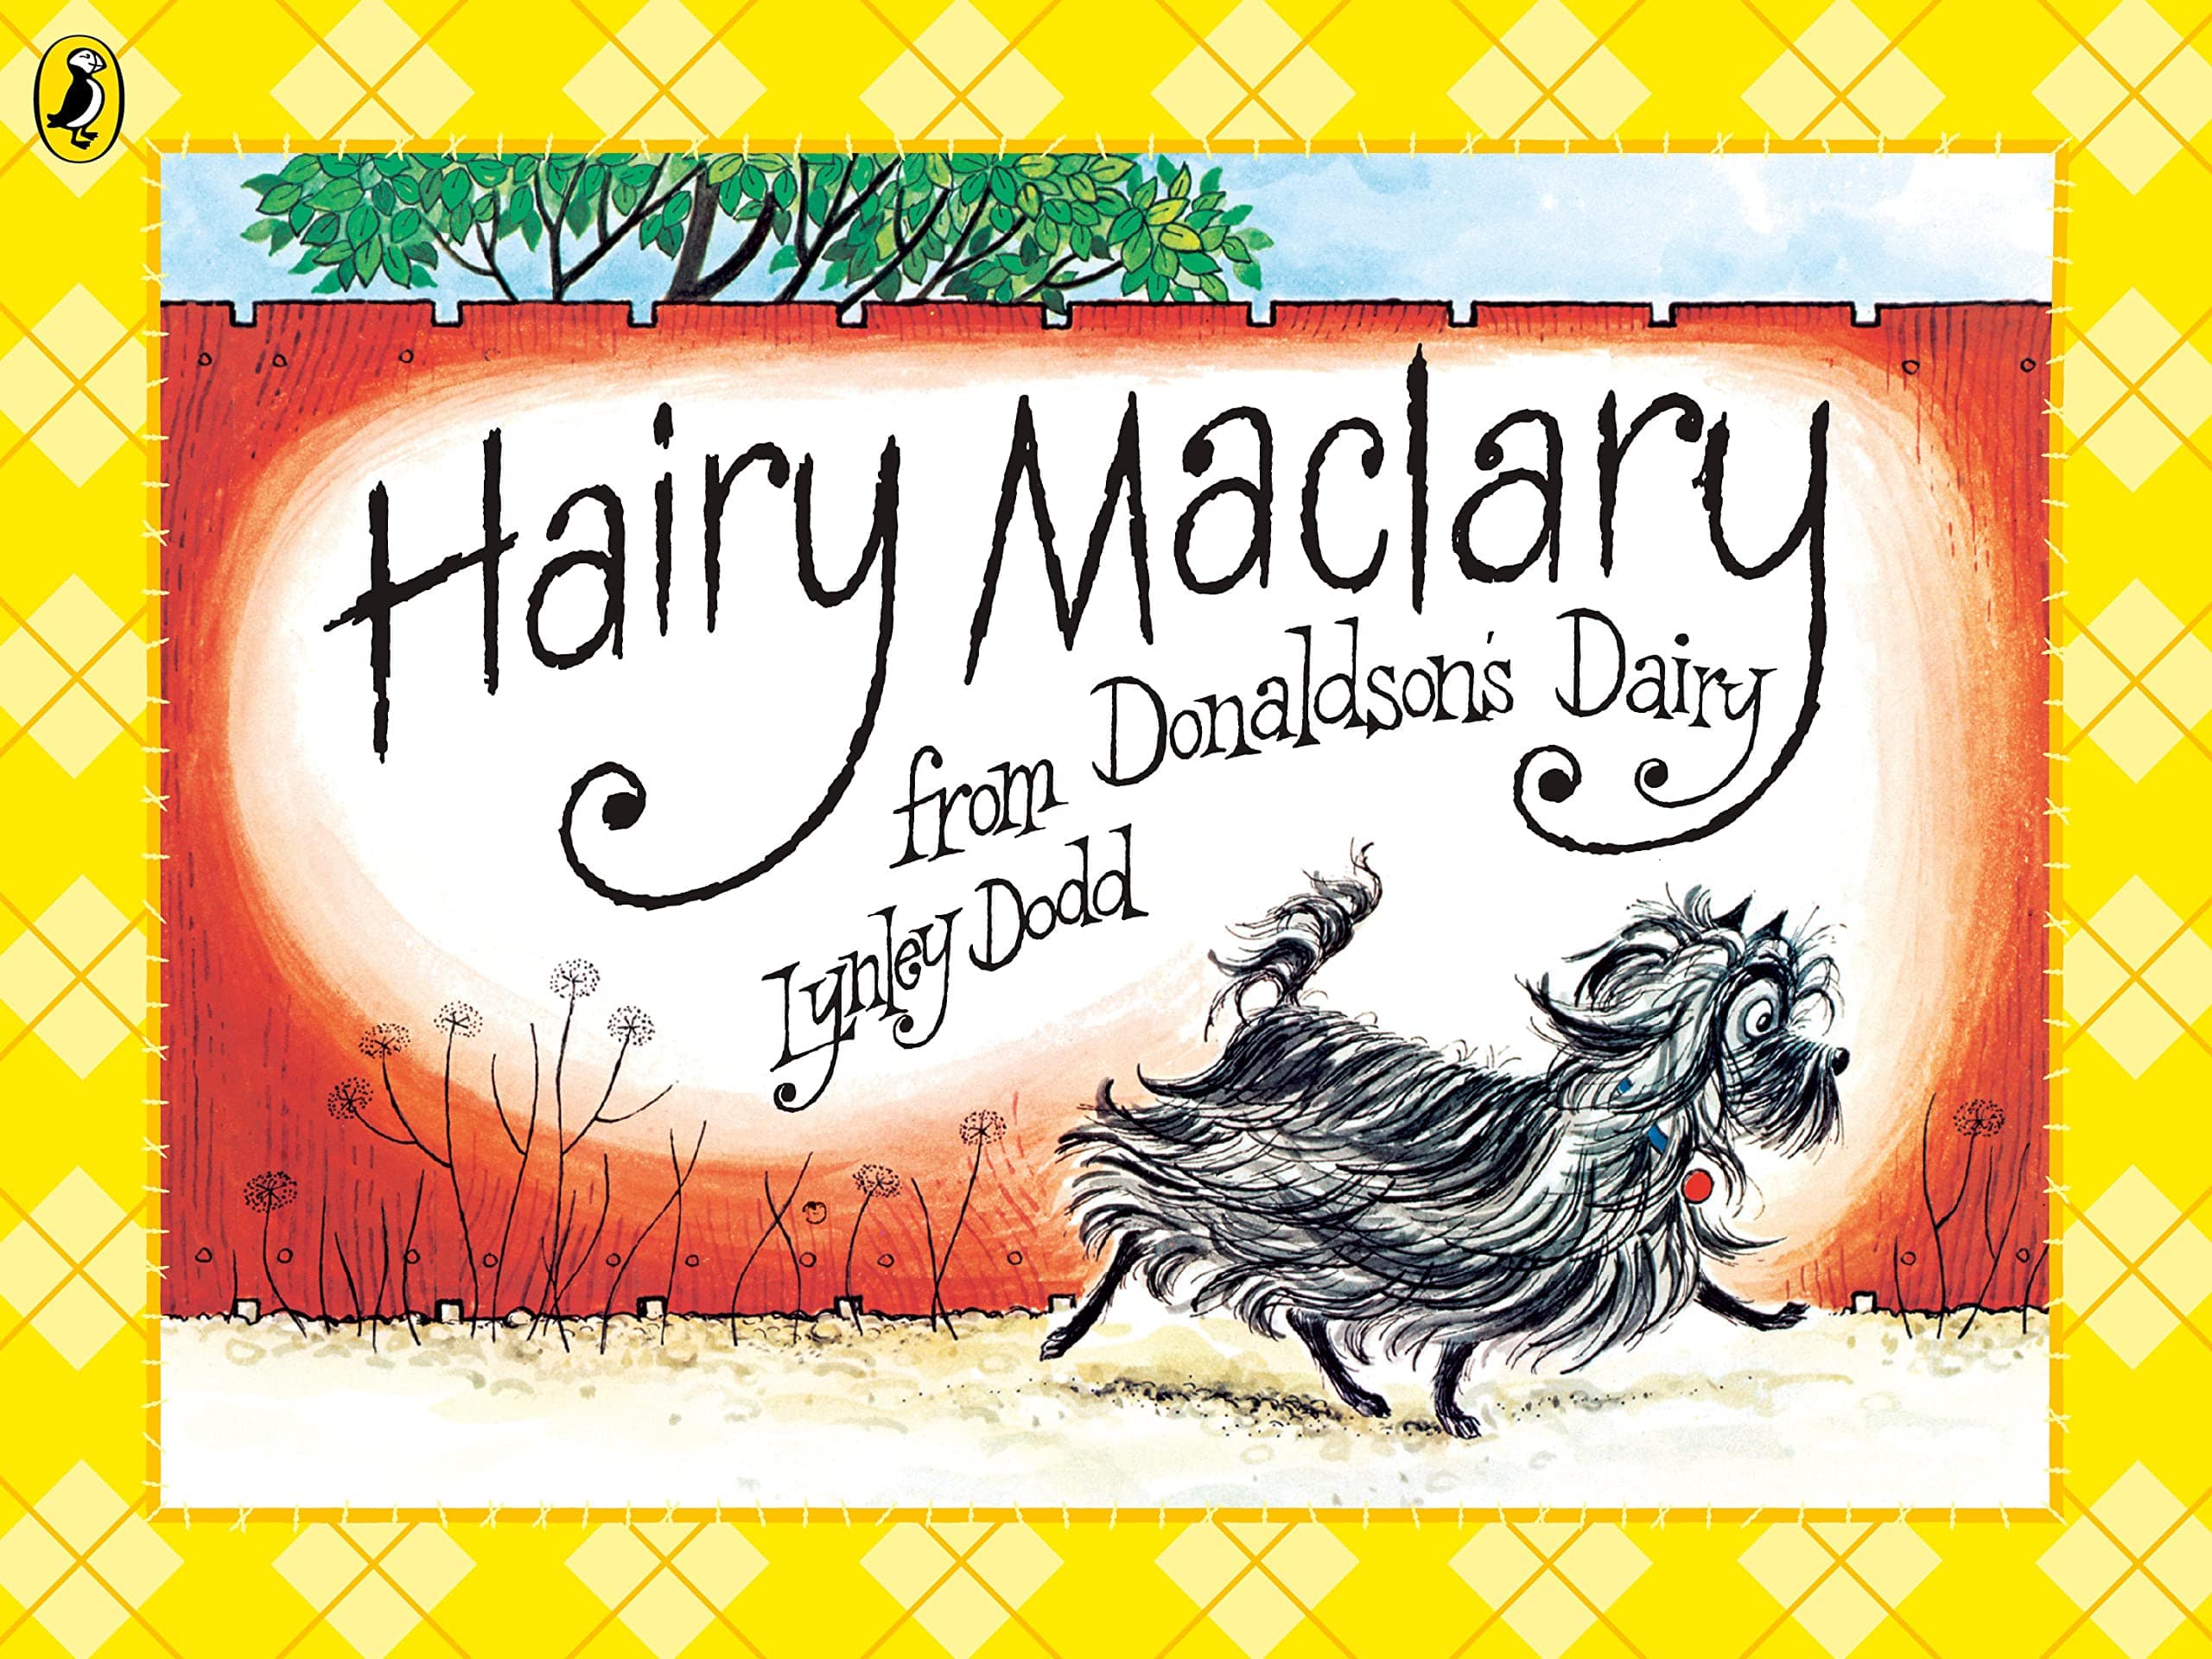 IMG : Hairy Maclary from Donaldson's Diary